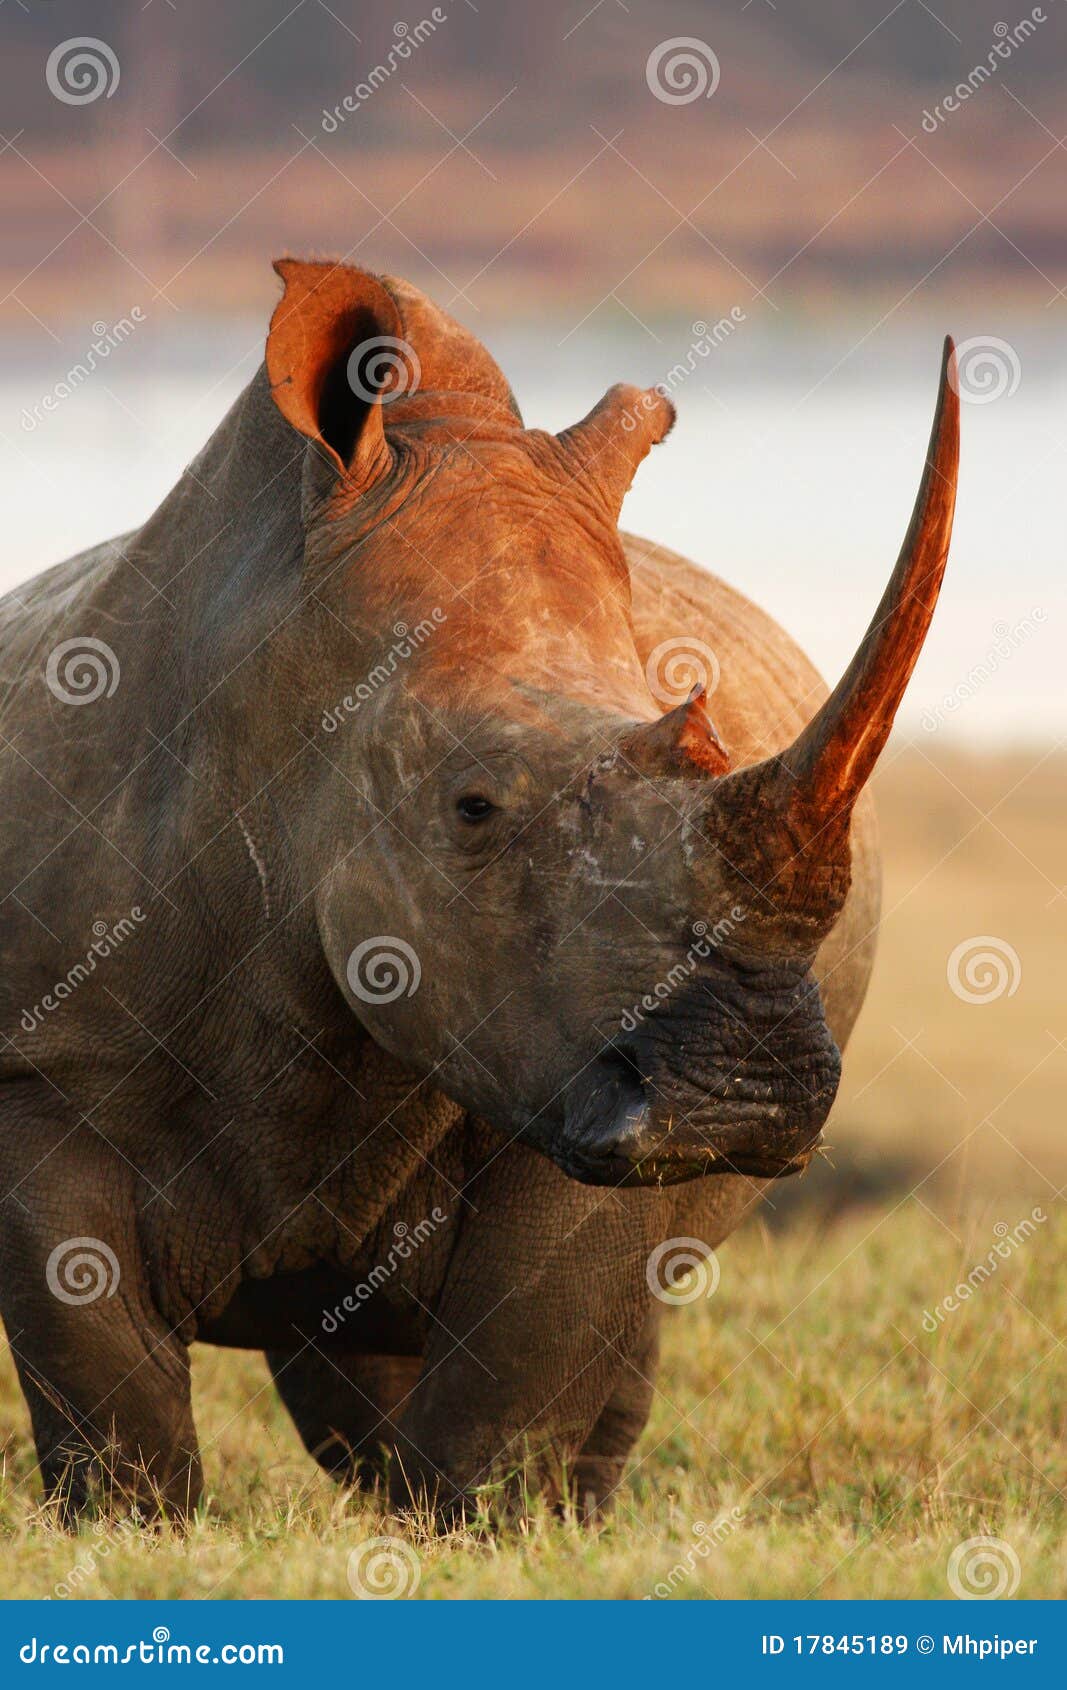 rhino pose